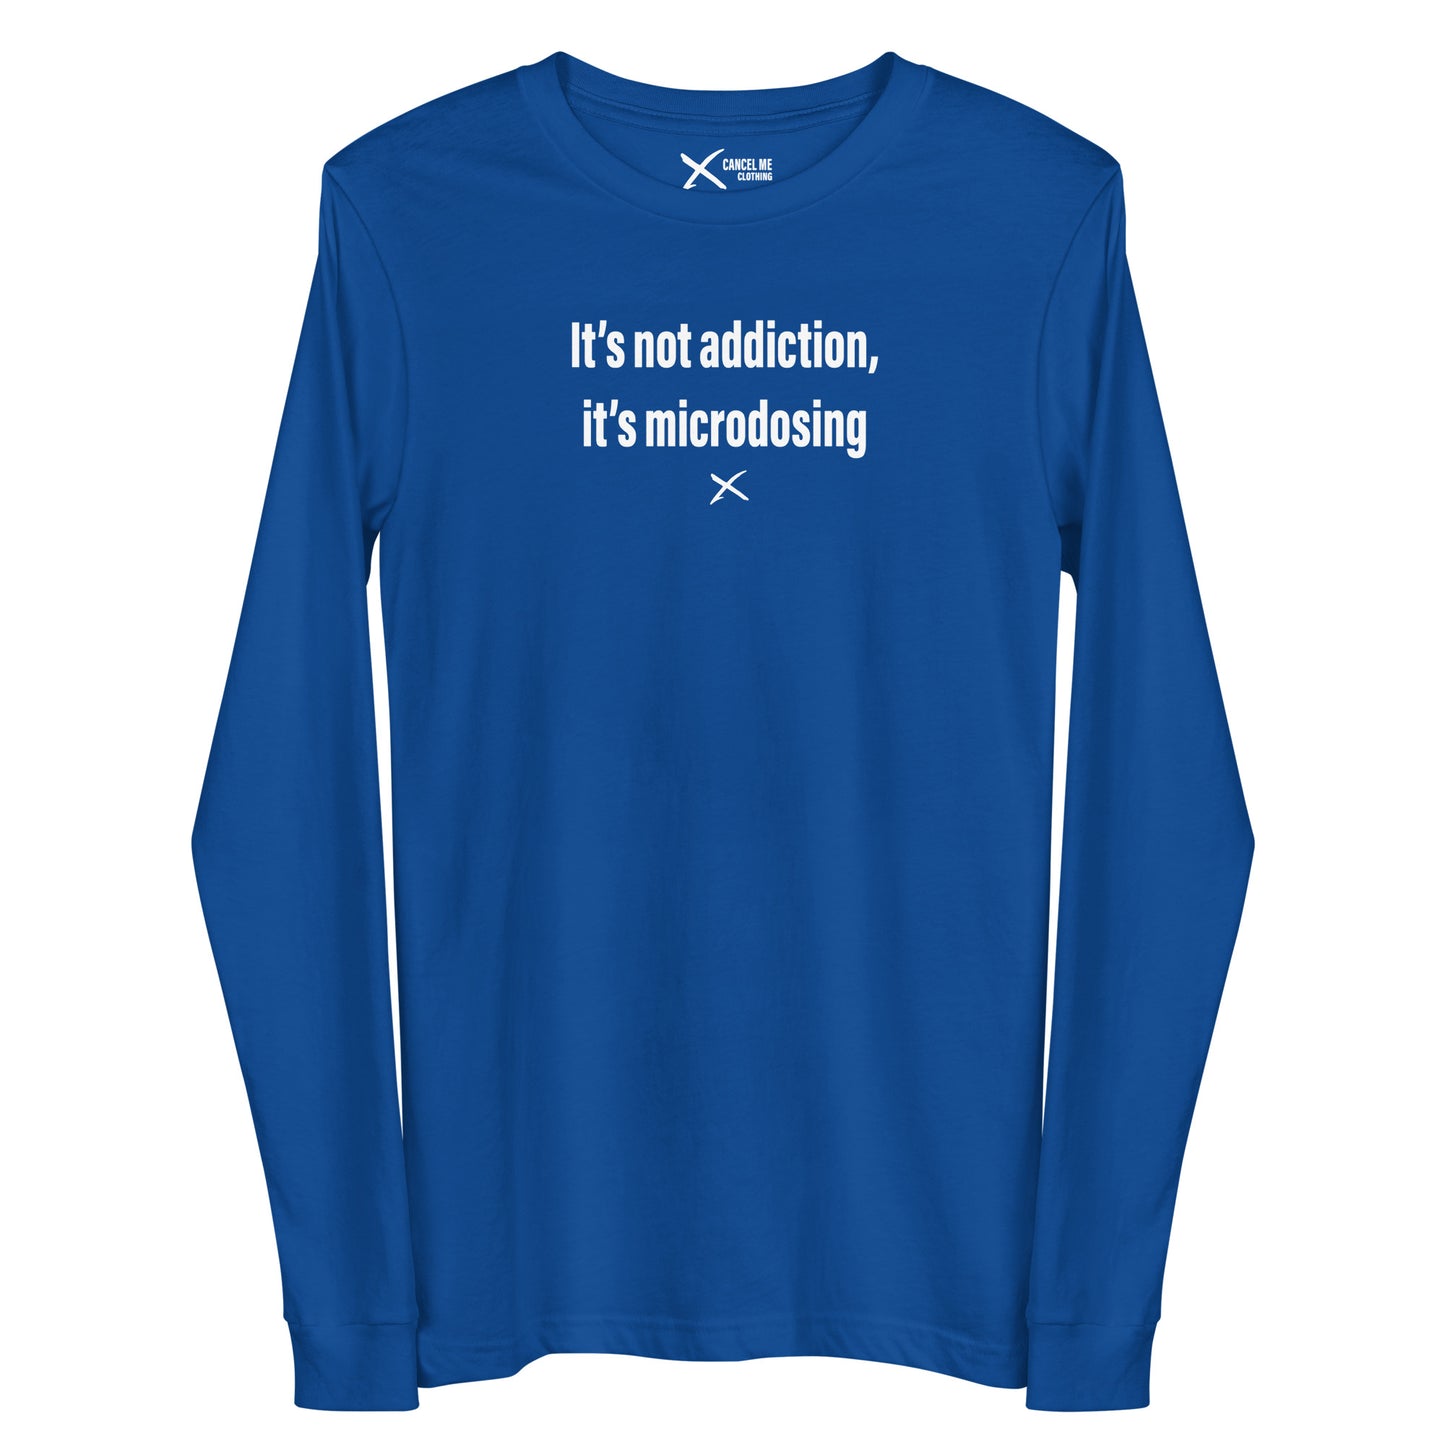 It's not addiction, it's microdosing - Longsleeve